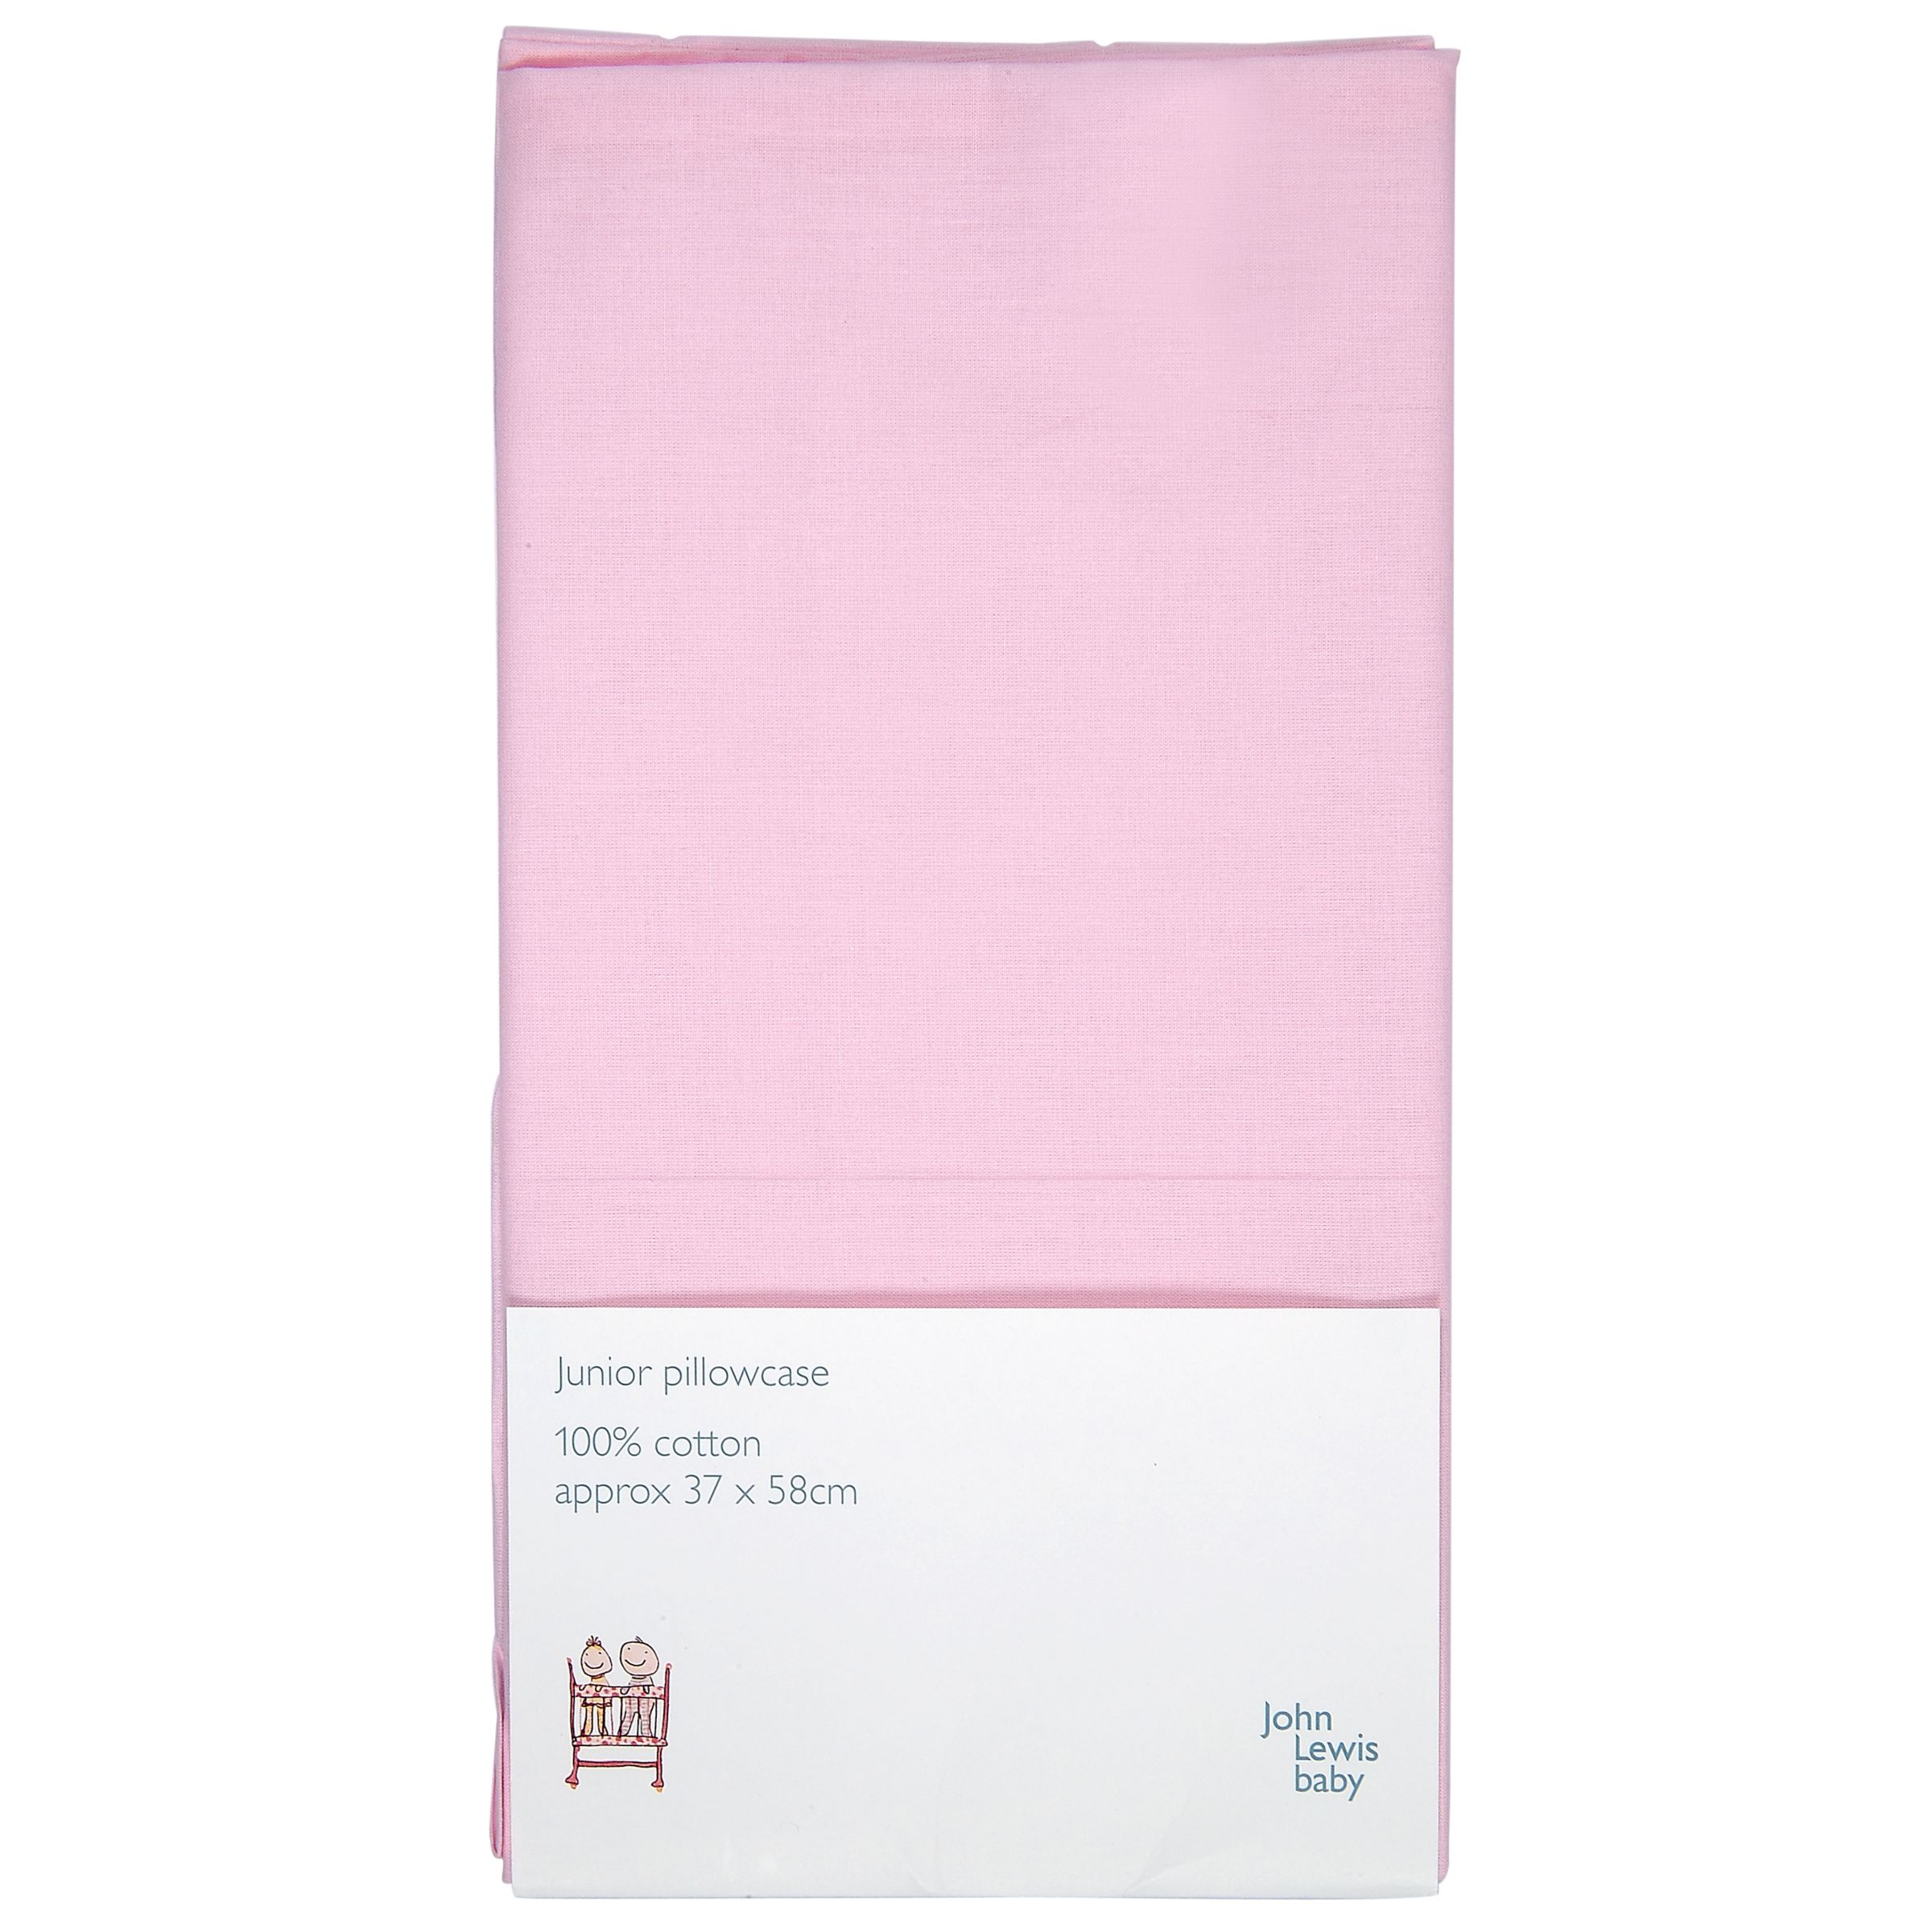 John Lewis Baby Cot / Cotbed Pillowcase, Pink